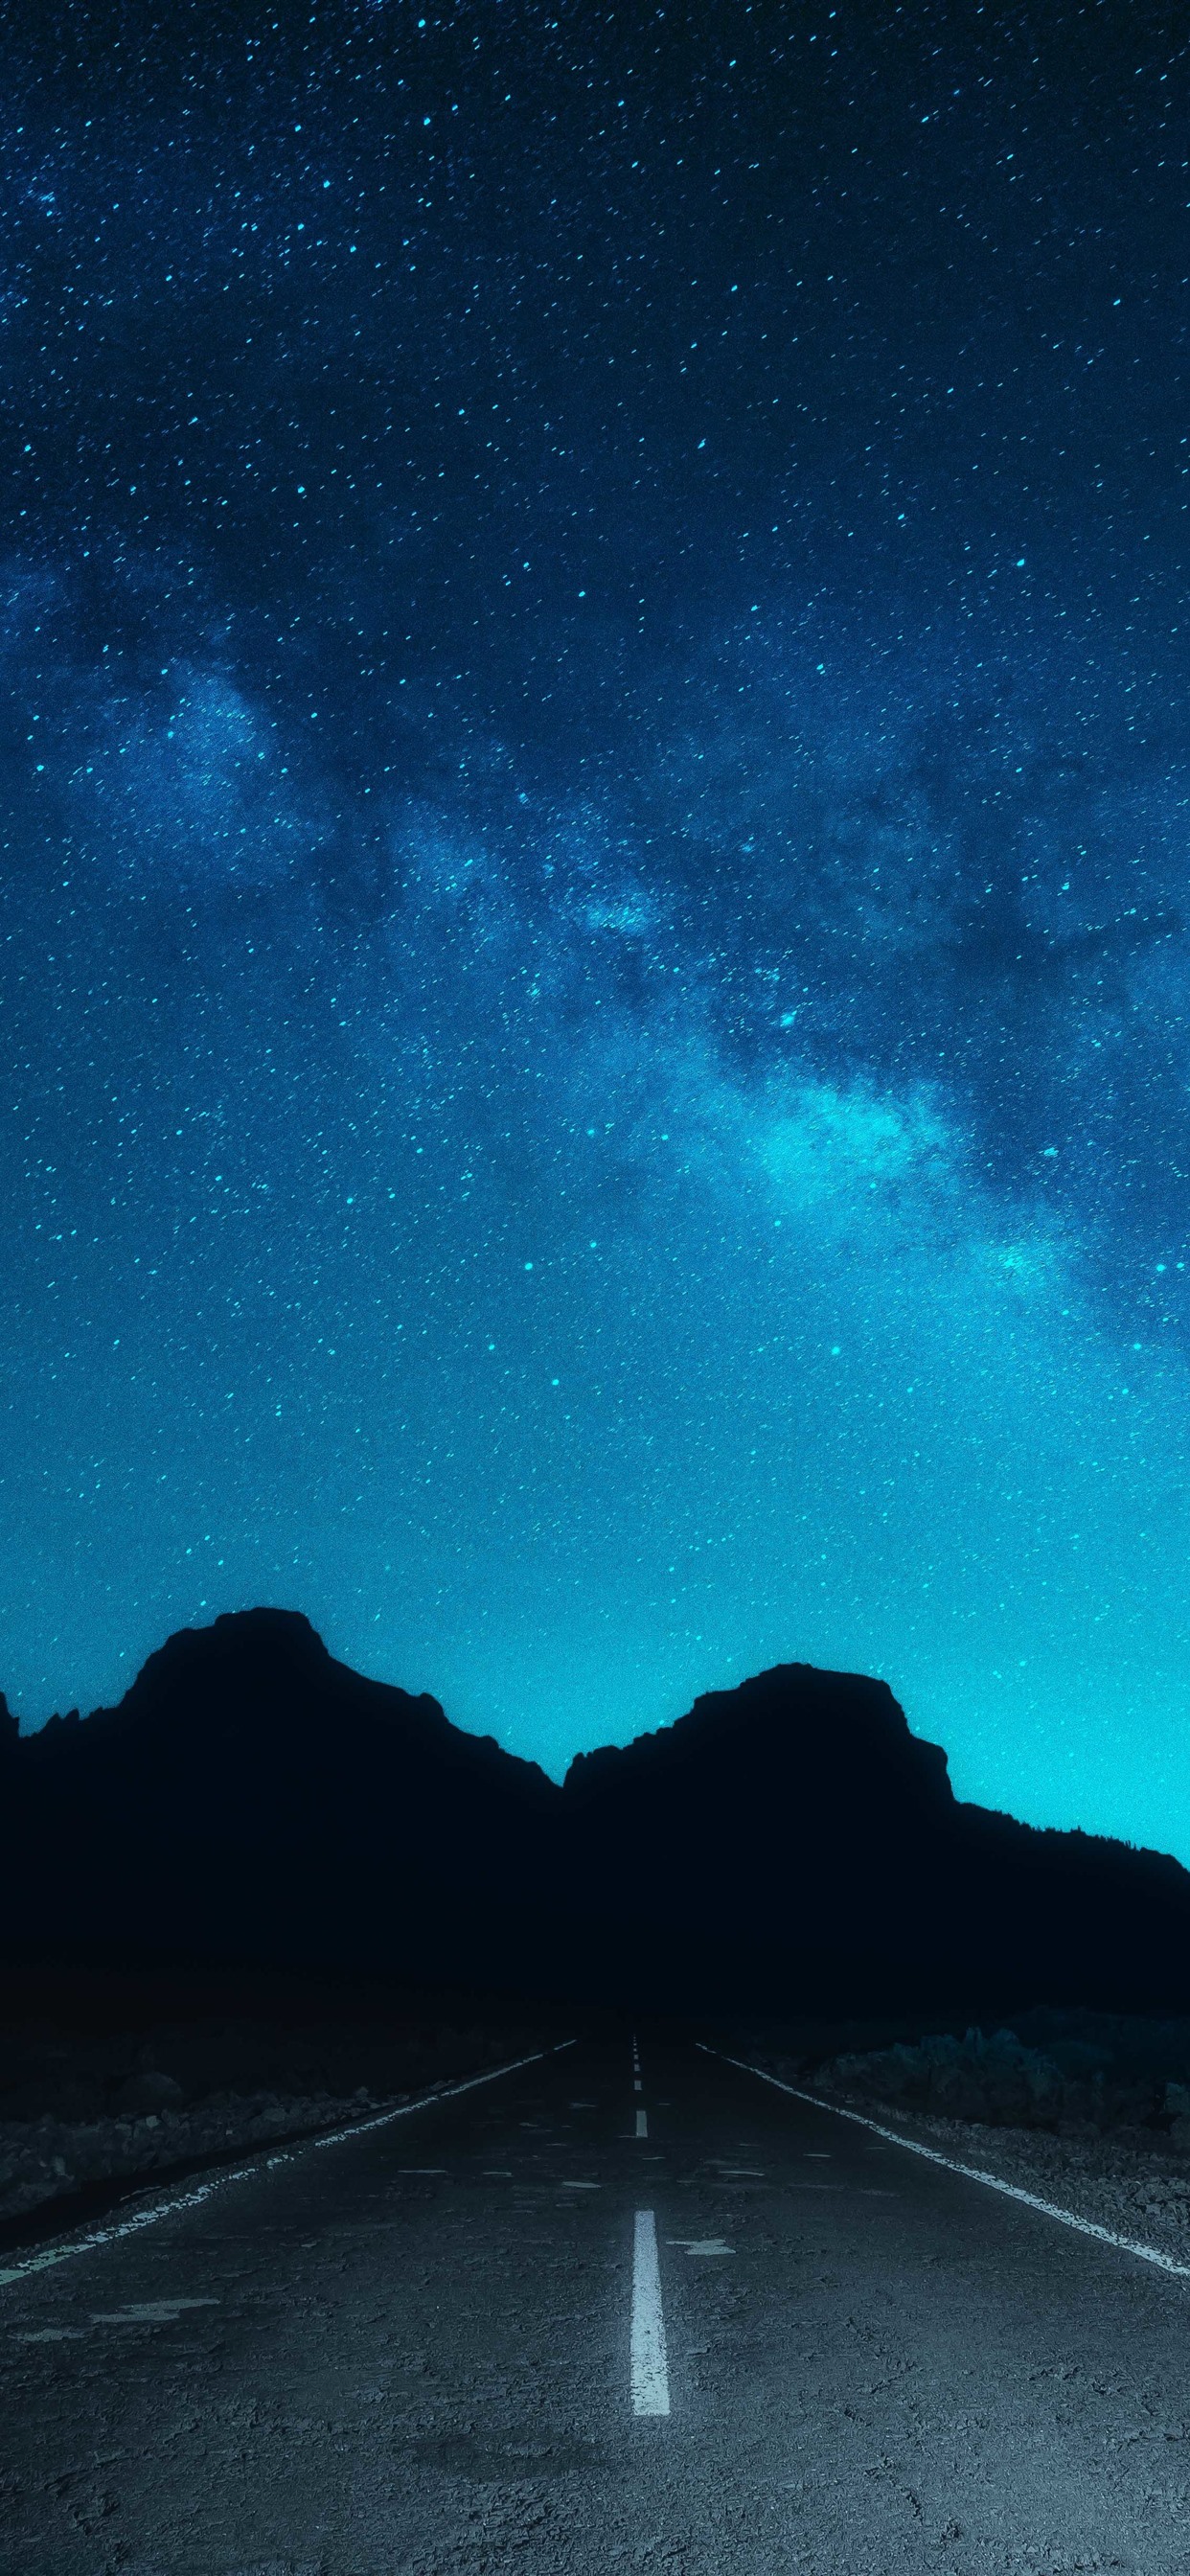 Iphone Wallpaper Beautiful Night Sky, Starry, Road - 아이폰 밤하늘 별 배경 화면 - HD Wallpaper 